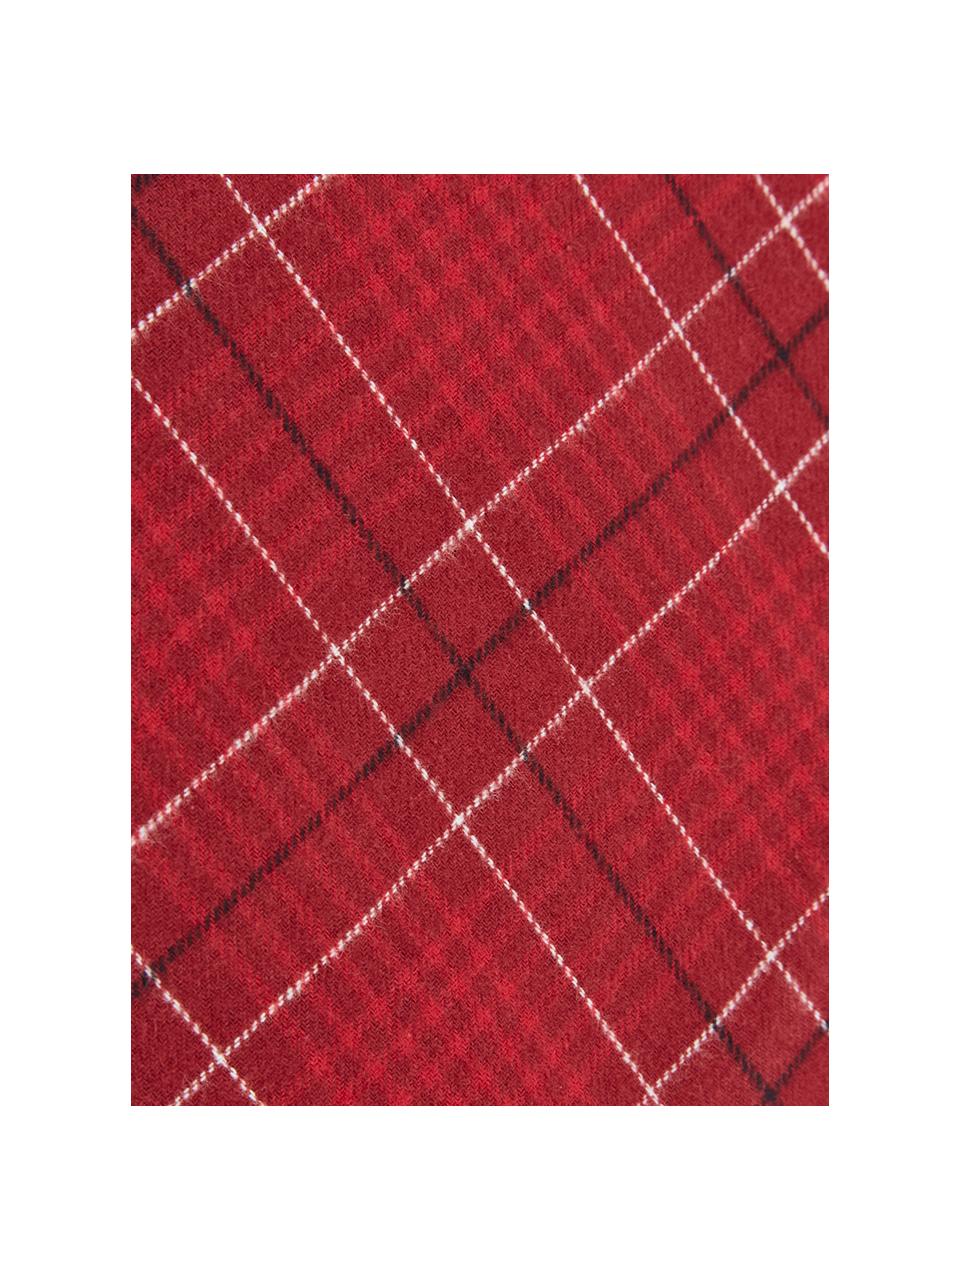 Flanell-Kissenbezug Checked in Rot, kariert, Webart: Flanell Flanell ist ein k, Rot, Weiss, Schwarz, 40 x 80 cm